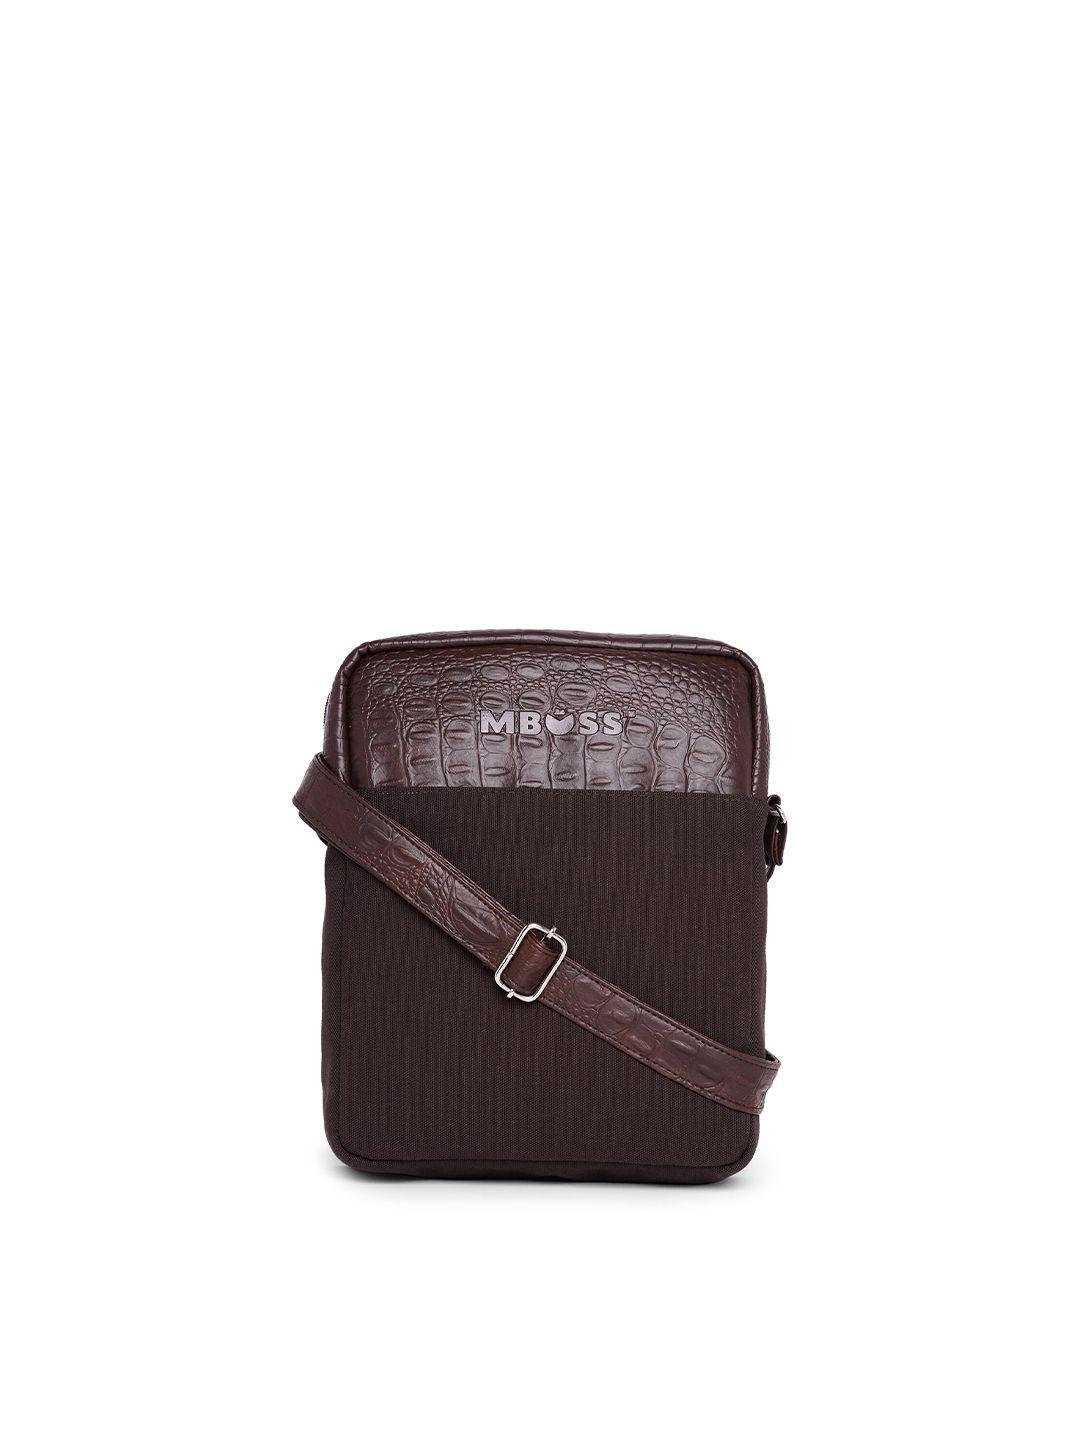 mboss unisex brown textured messenger bag